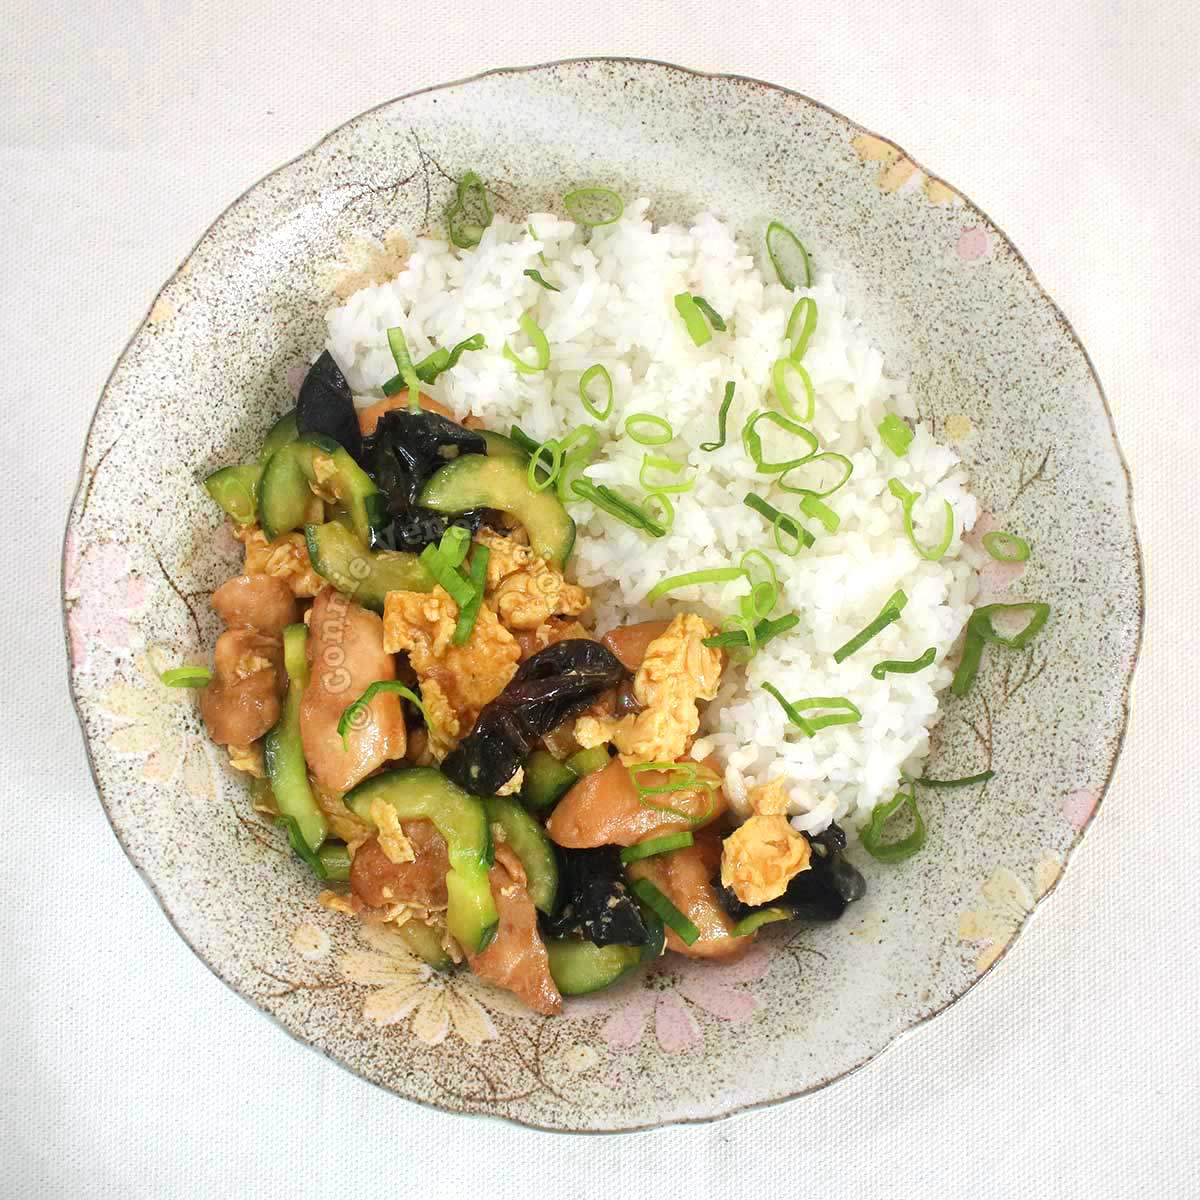 Moo shu chicken rice bowl